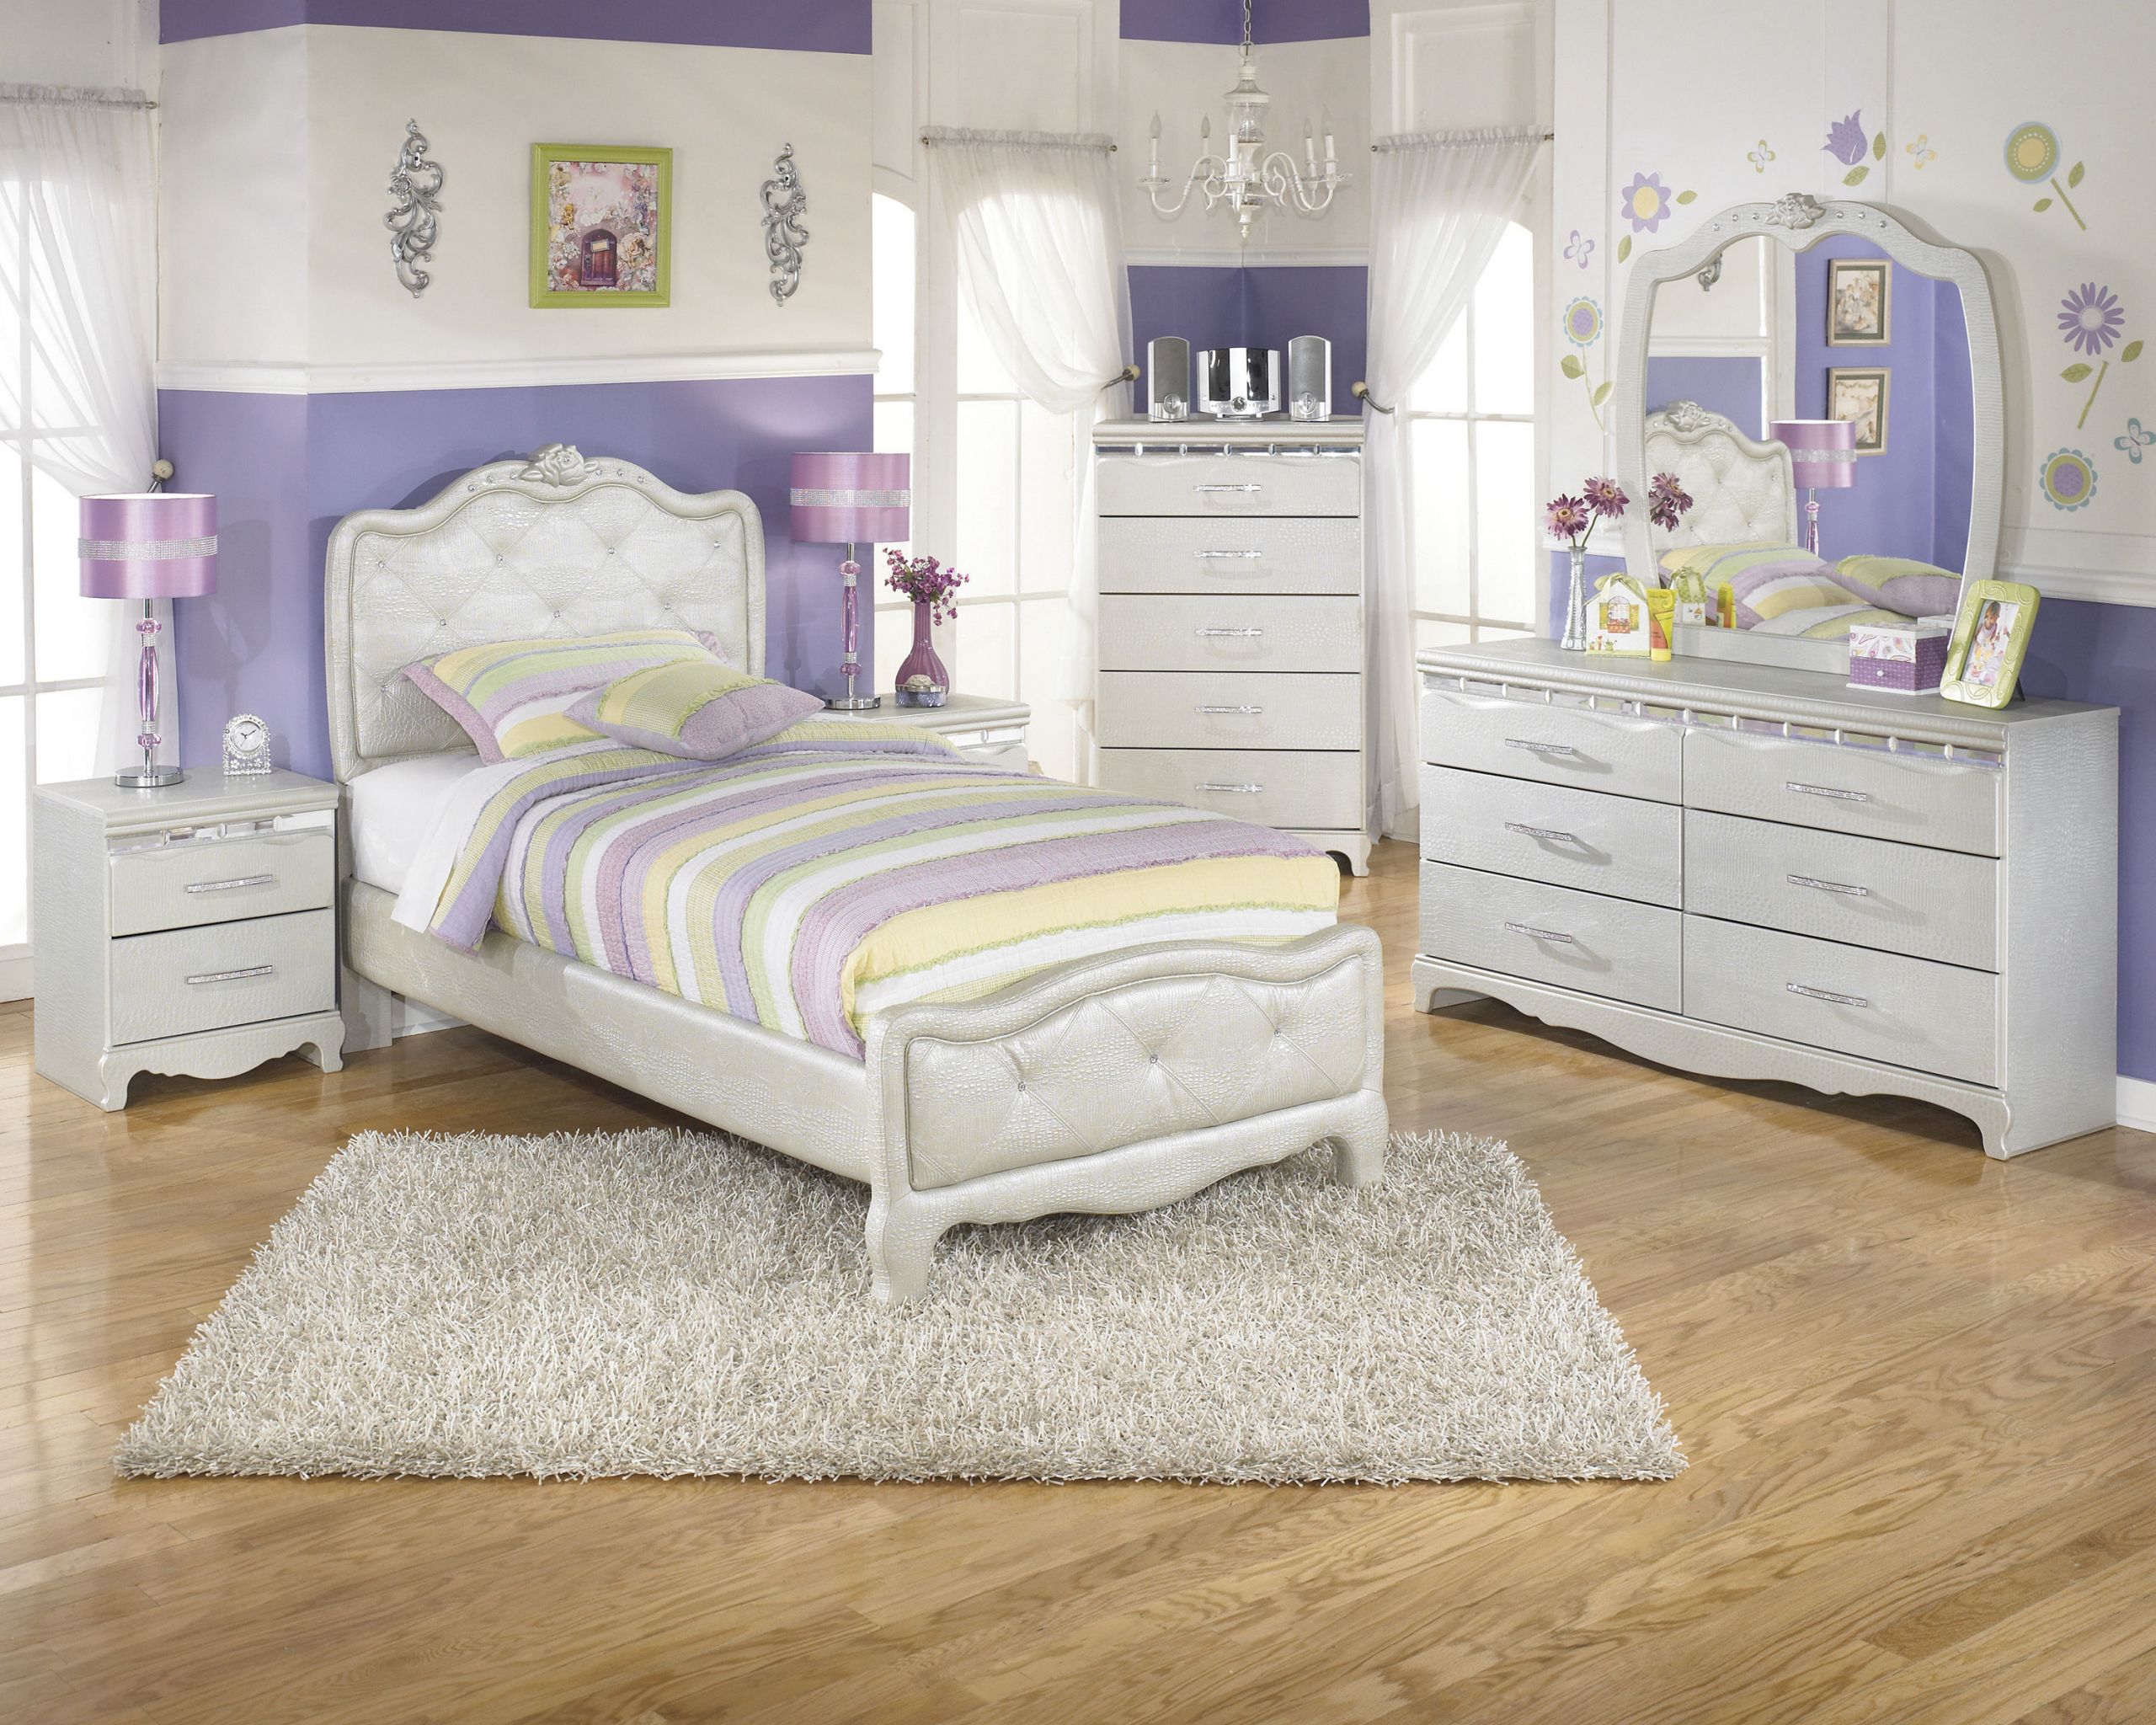 Ashley Kids Bedroom Set New ashley Furniture Zarollina 2pc Kids Bedroom Set with Twin